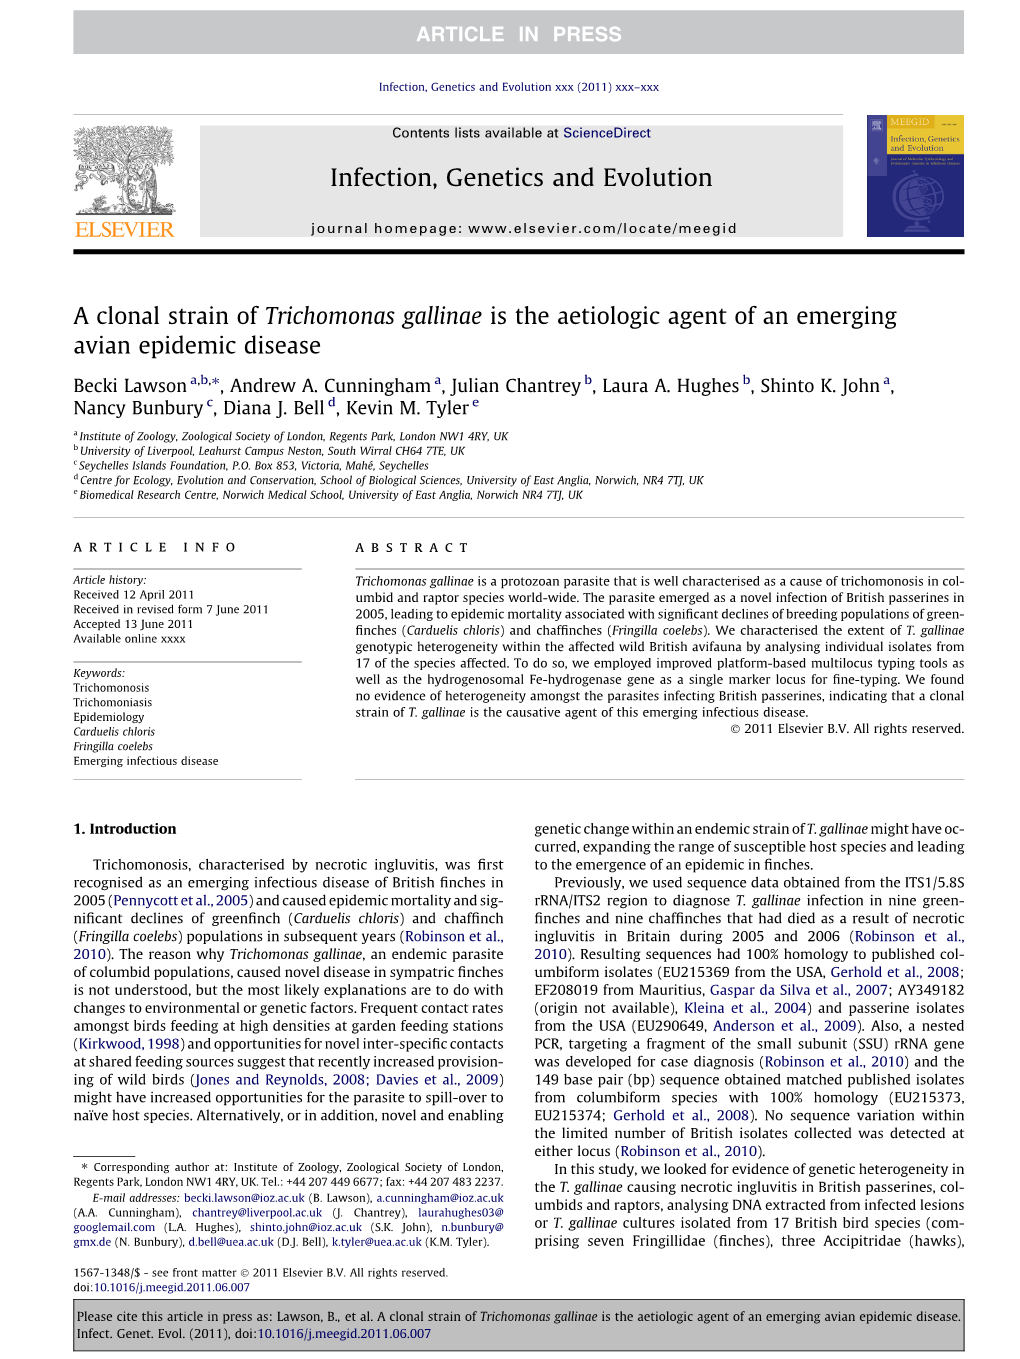 A Clonal Strain of Trichomonas Gallinae Is the Aetiologic Agent of an Emerging Avian Epidemic Disease ⇑ Becki Lawson A,B, , Andrew A